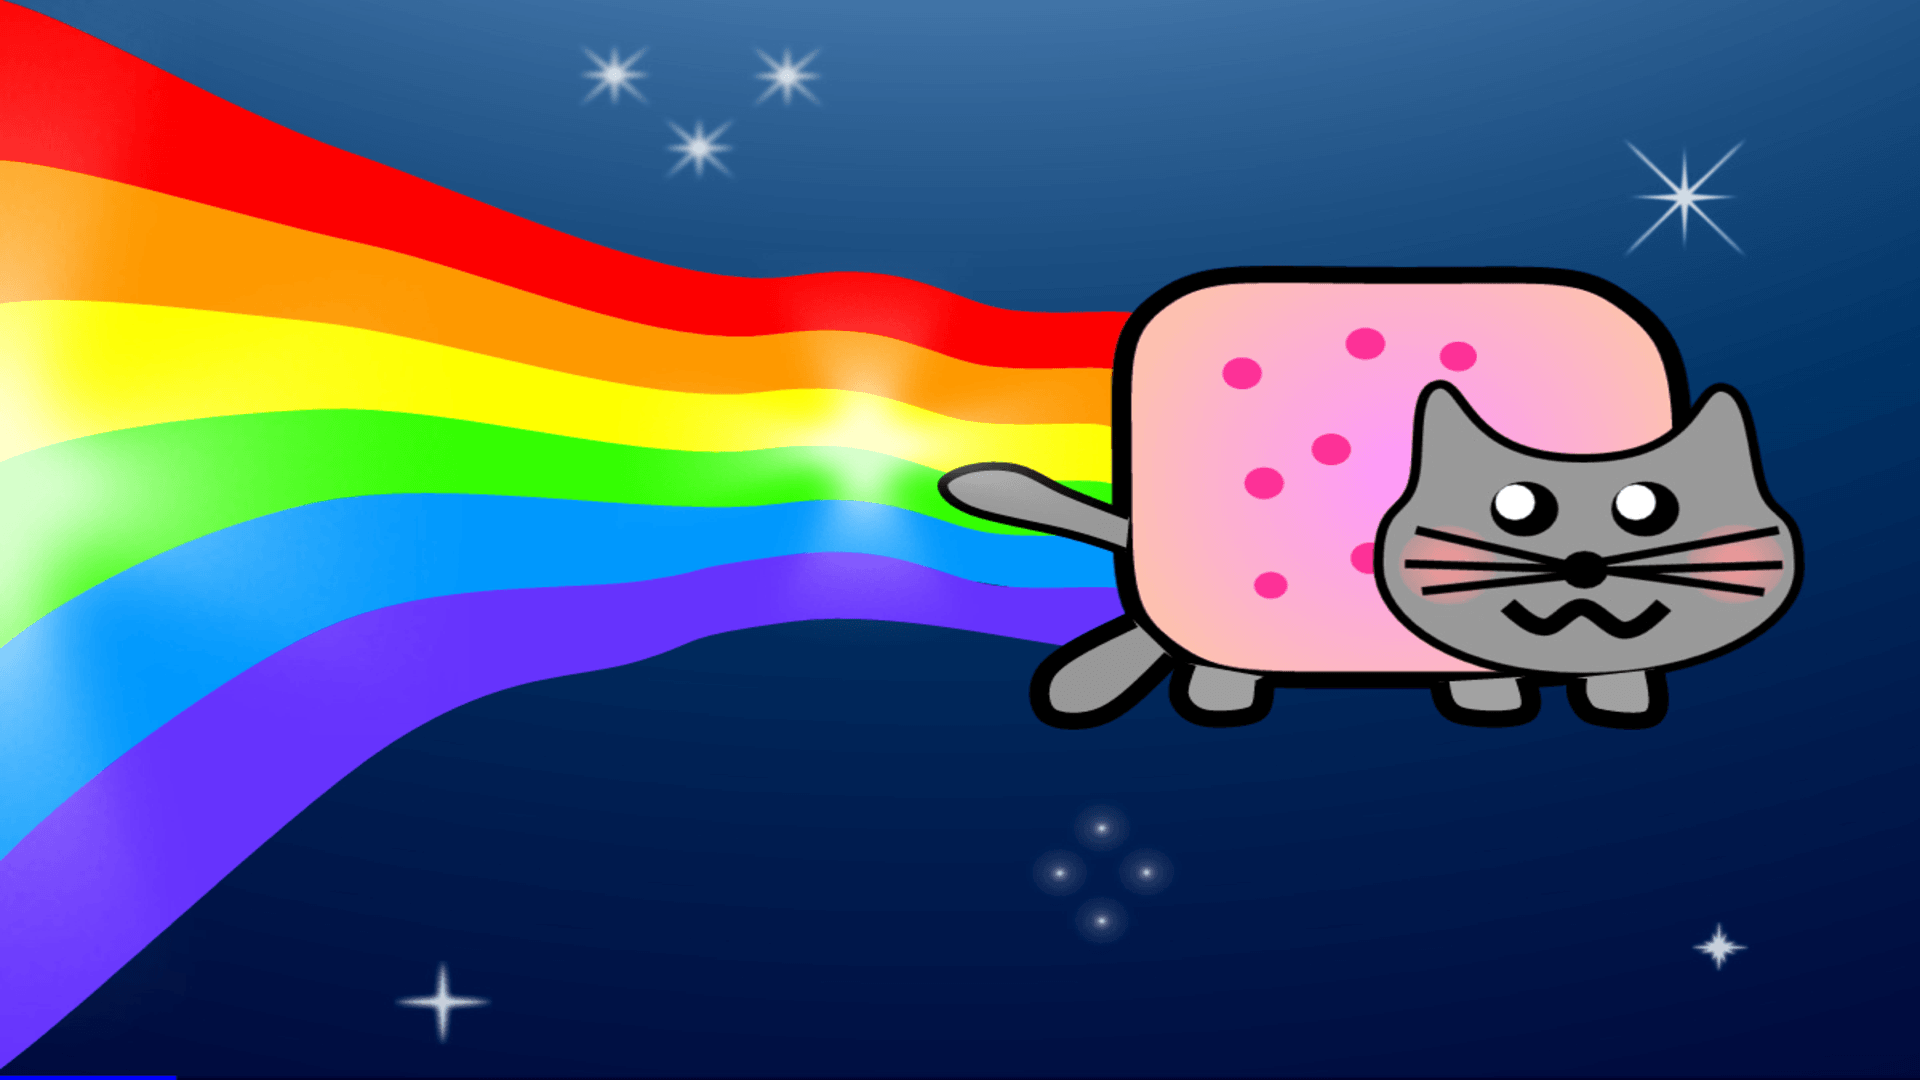 Nyan Cat HD Backgrounds.